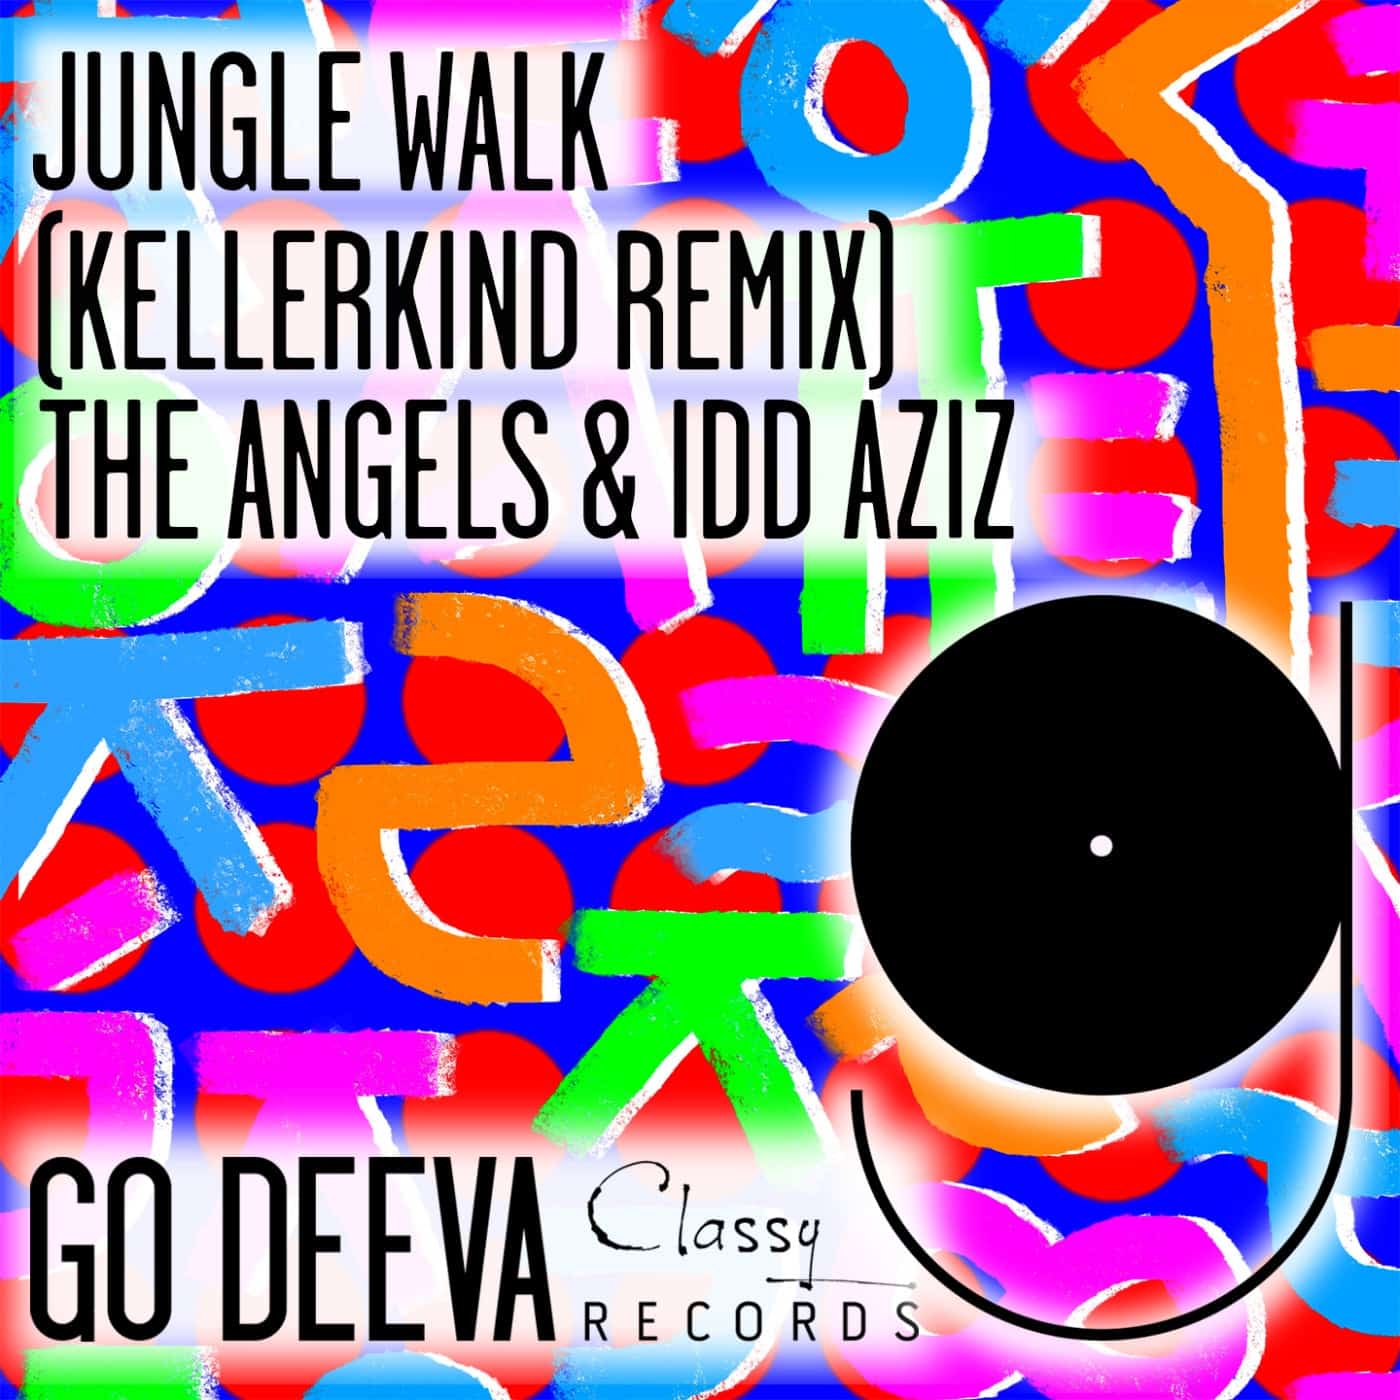 image cover: Idd Aziz, The Angels (IL) - Jungle Walk (Kellerkind Remix) on Go Deeva Records